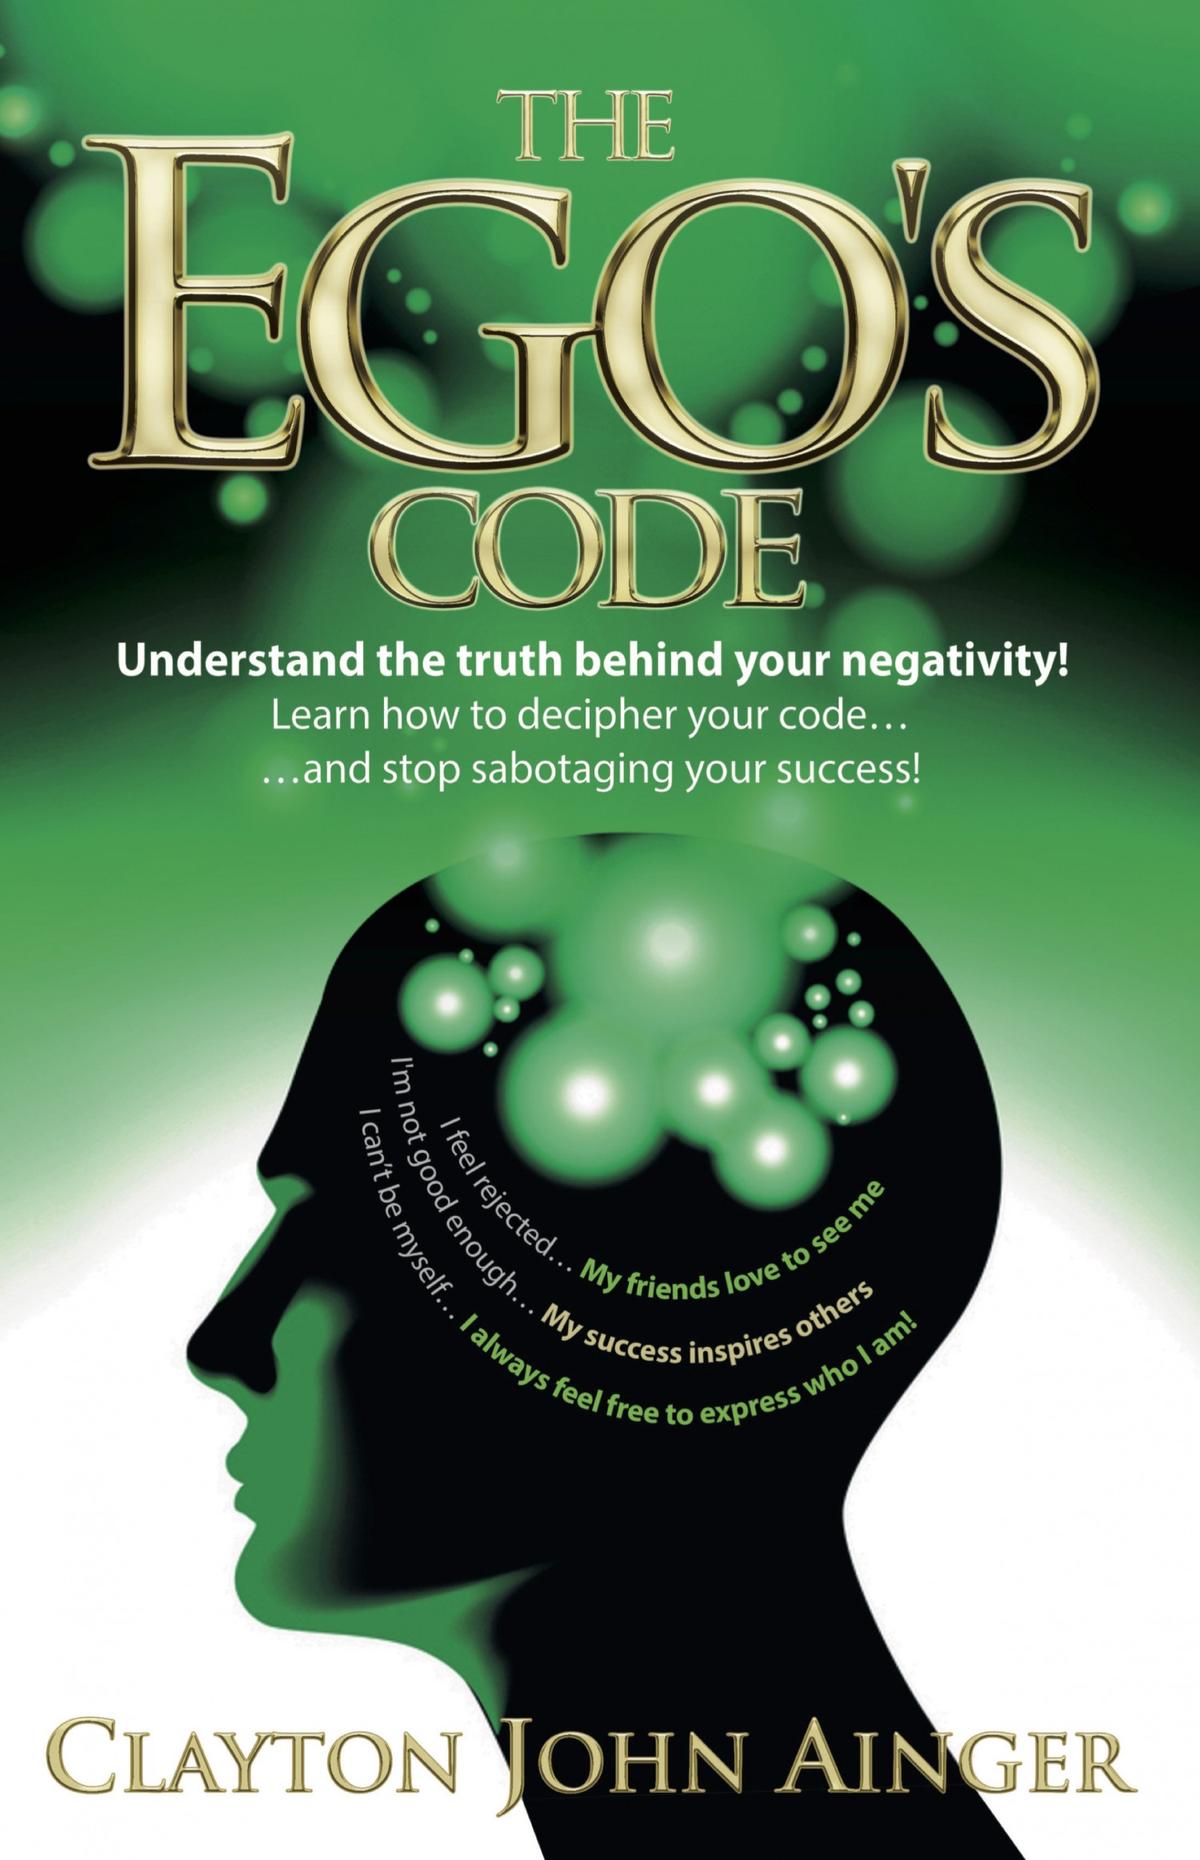 The Ego's Code by Clayton John Ainger (Panoma Press). Courtesy of Clayton John Ainger.